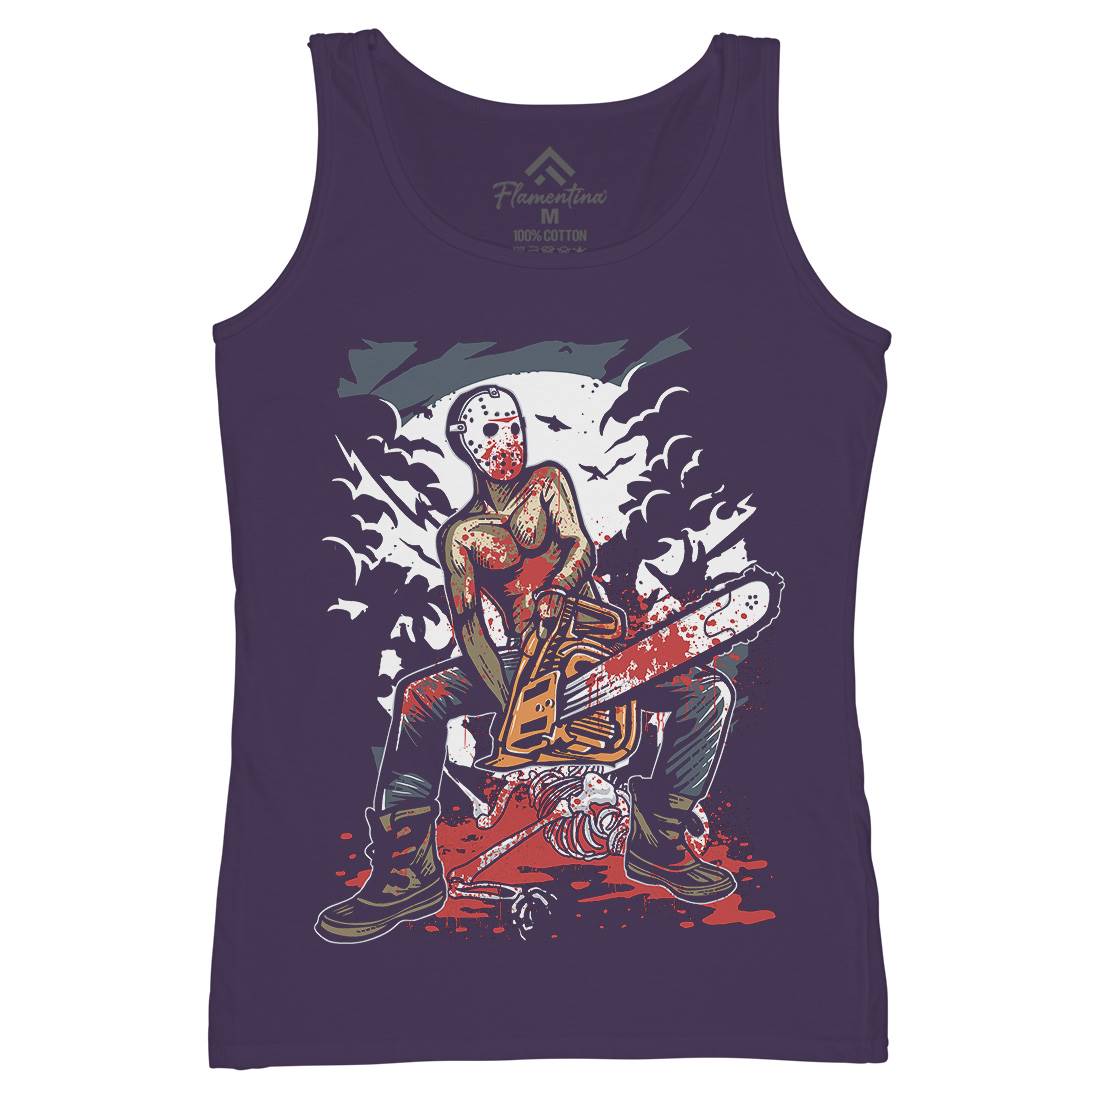 Chainsaw Killer Womens Organic Tank Top Vest Horror A515